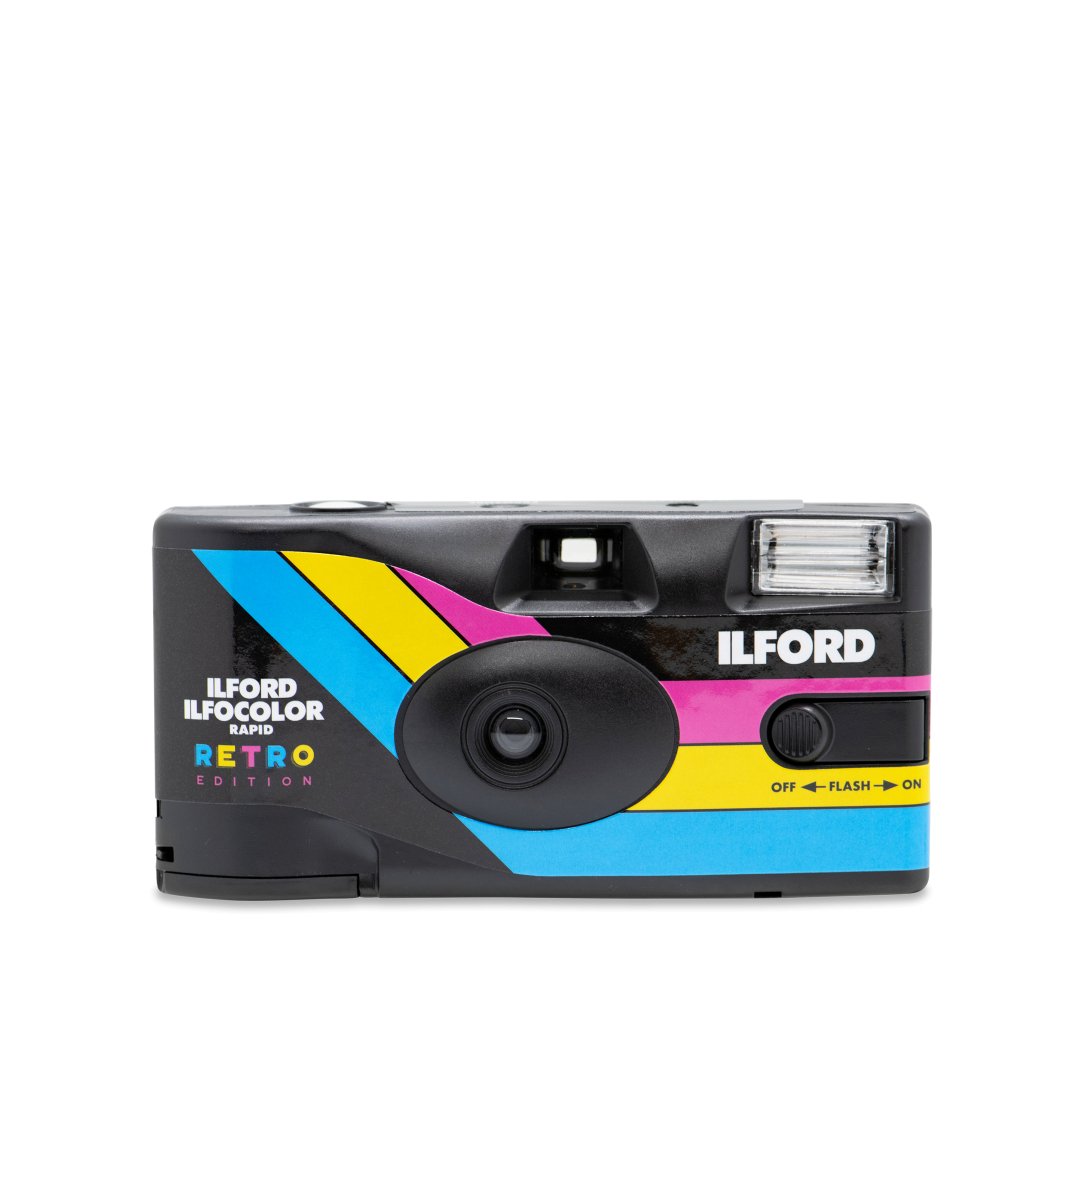 Ilford Ilfocolor Retro 400 - Single Use Camera - 27 exposure - Rewind Photo Lab - Ilford